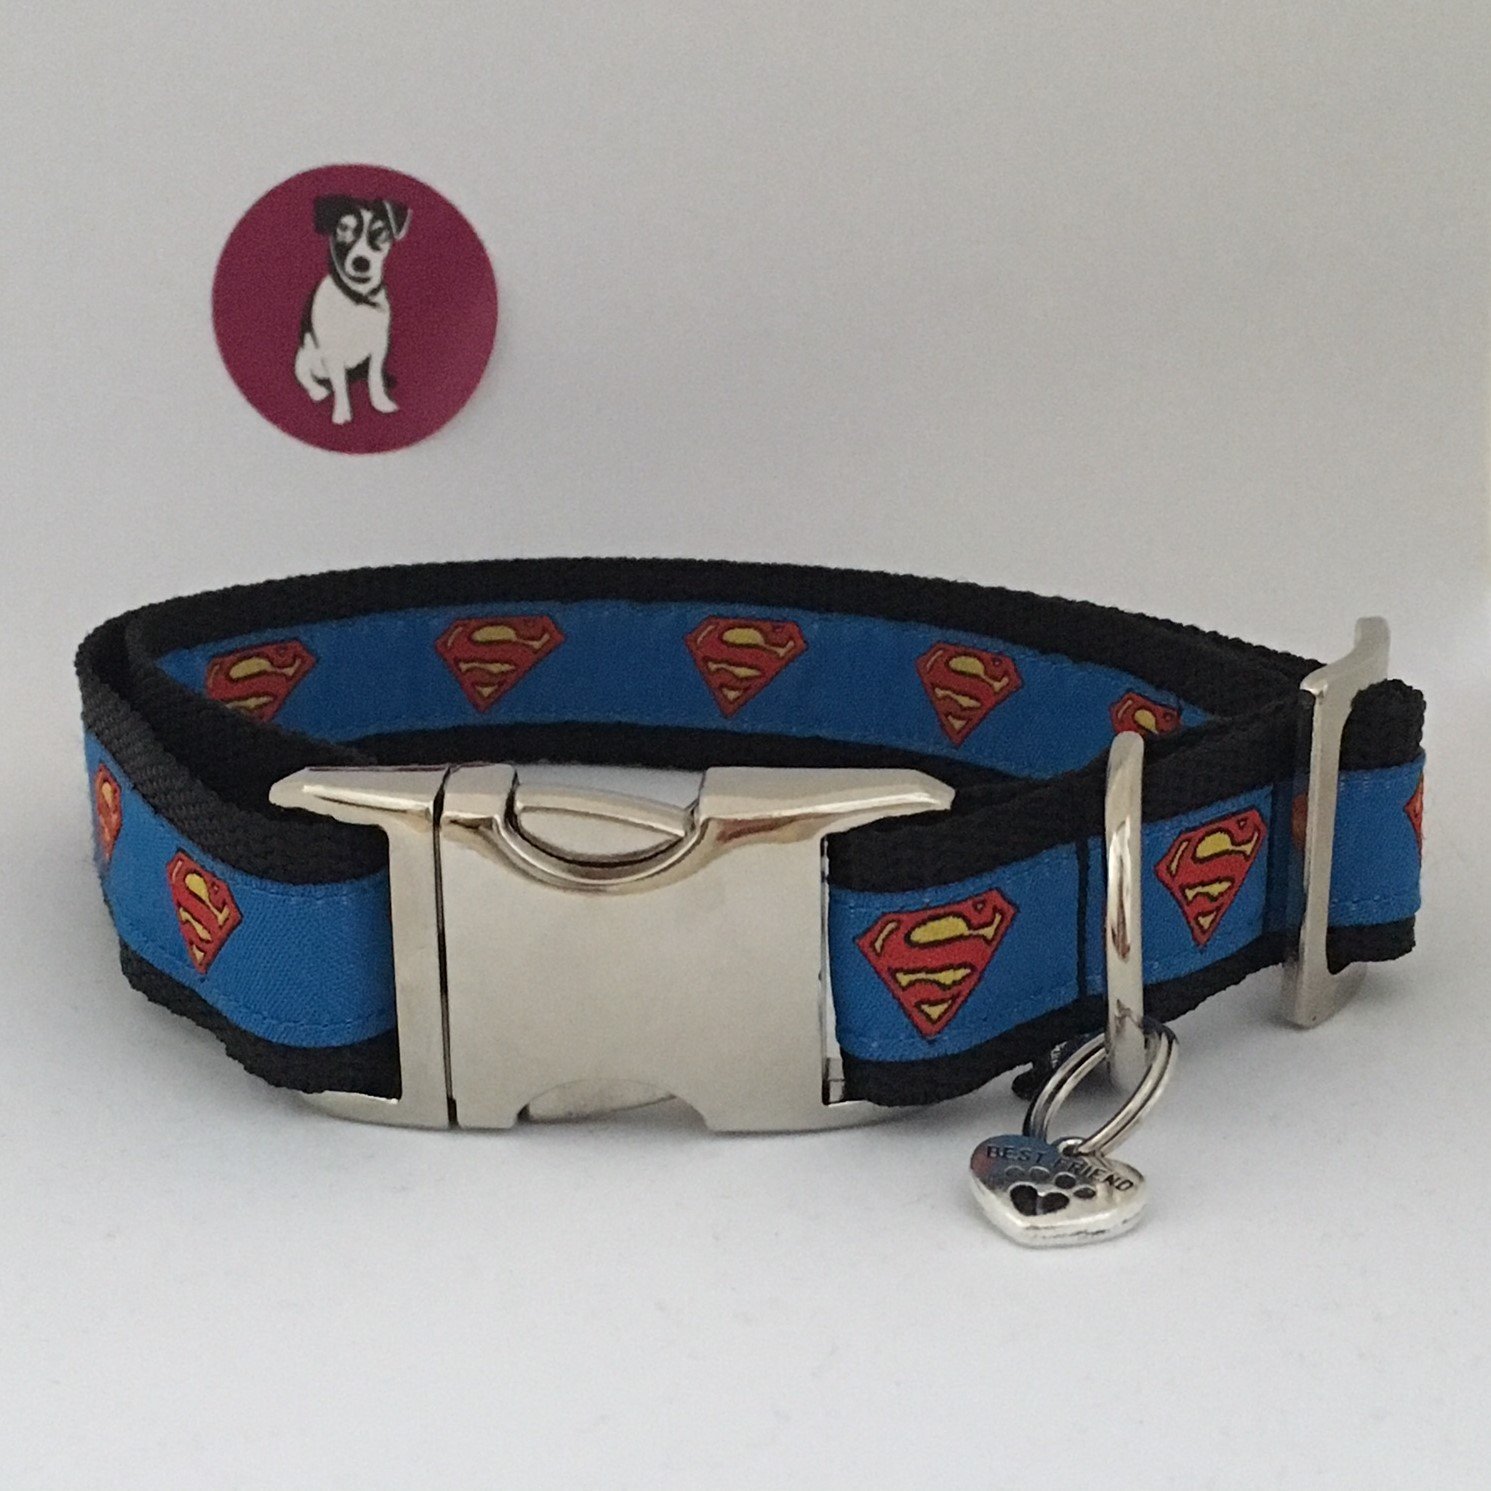 Jimmy und Katz Hundehalsband Superman 35cm-58cm x 2,5cm